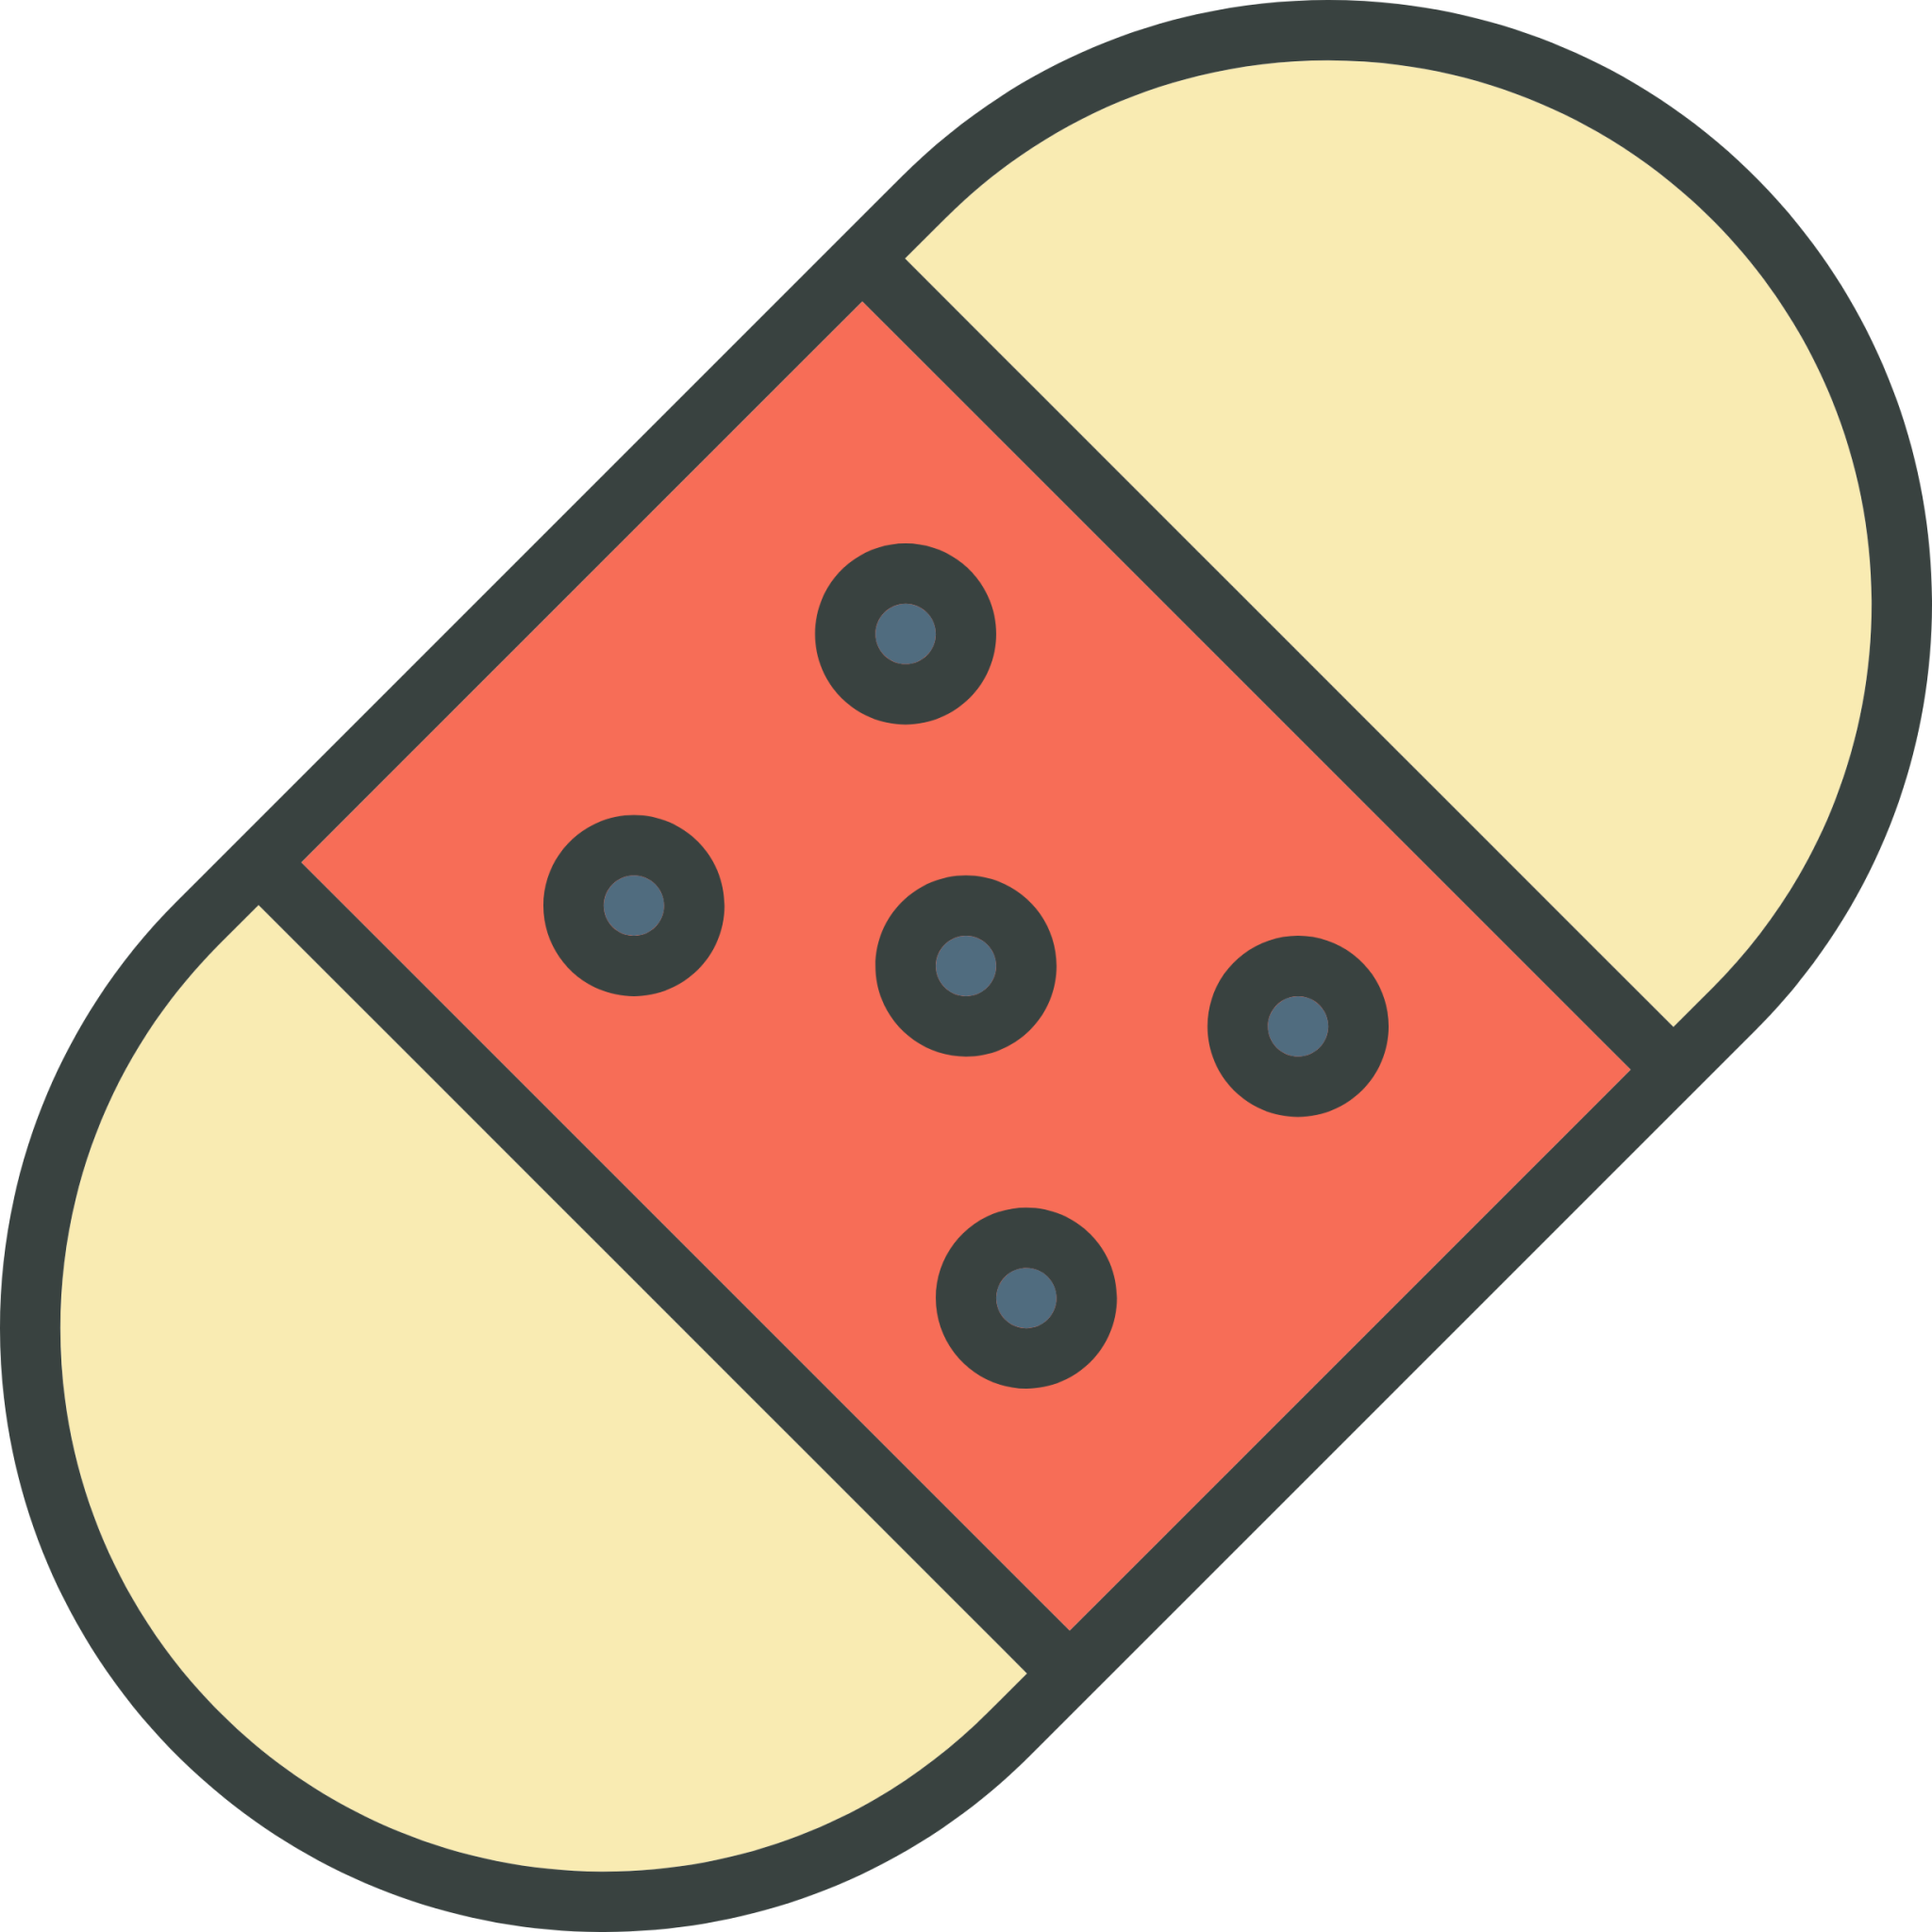 band aid icon